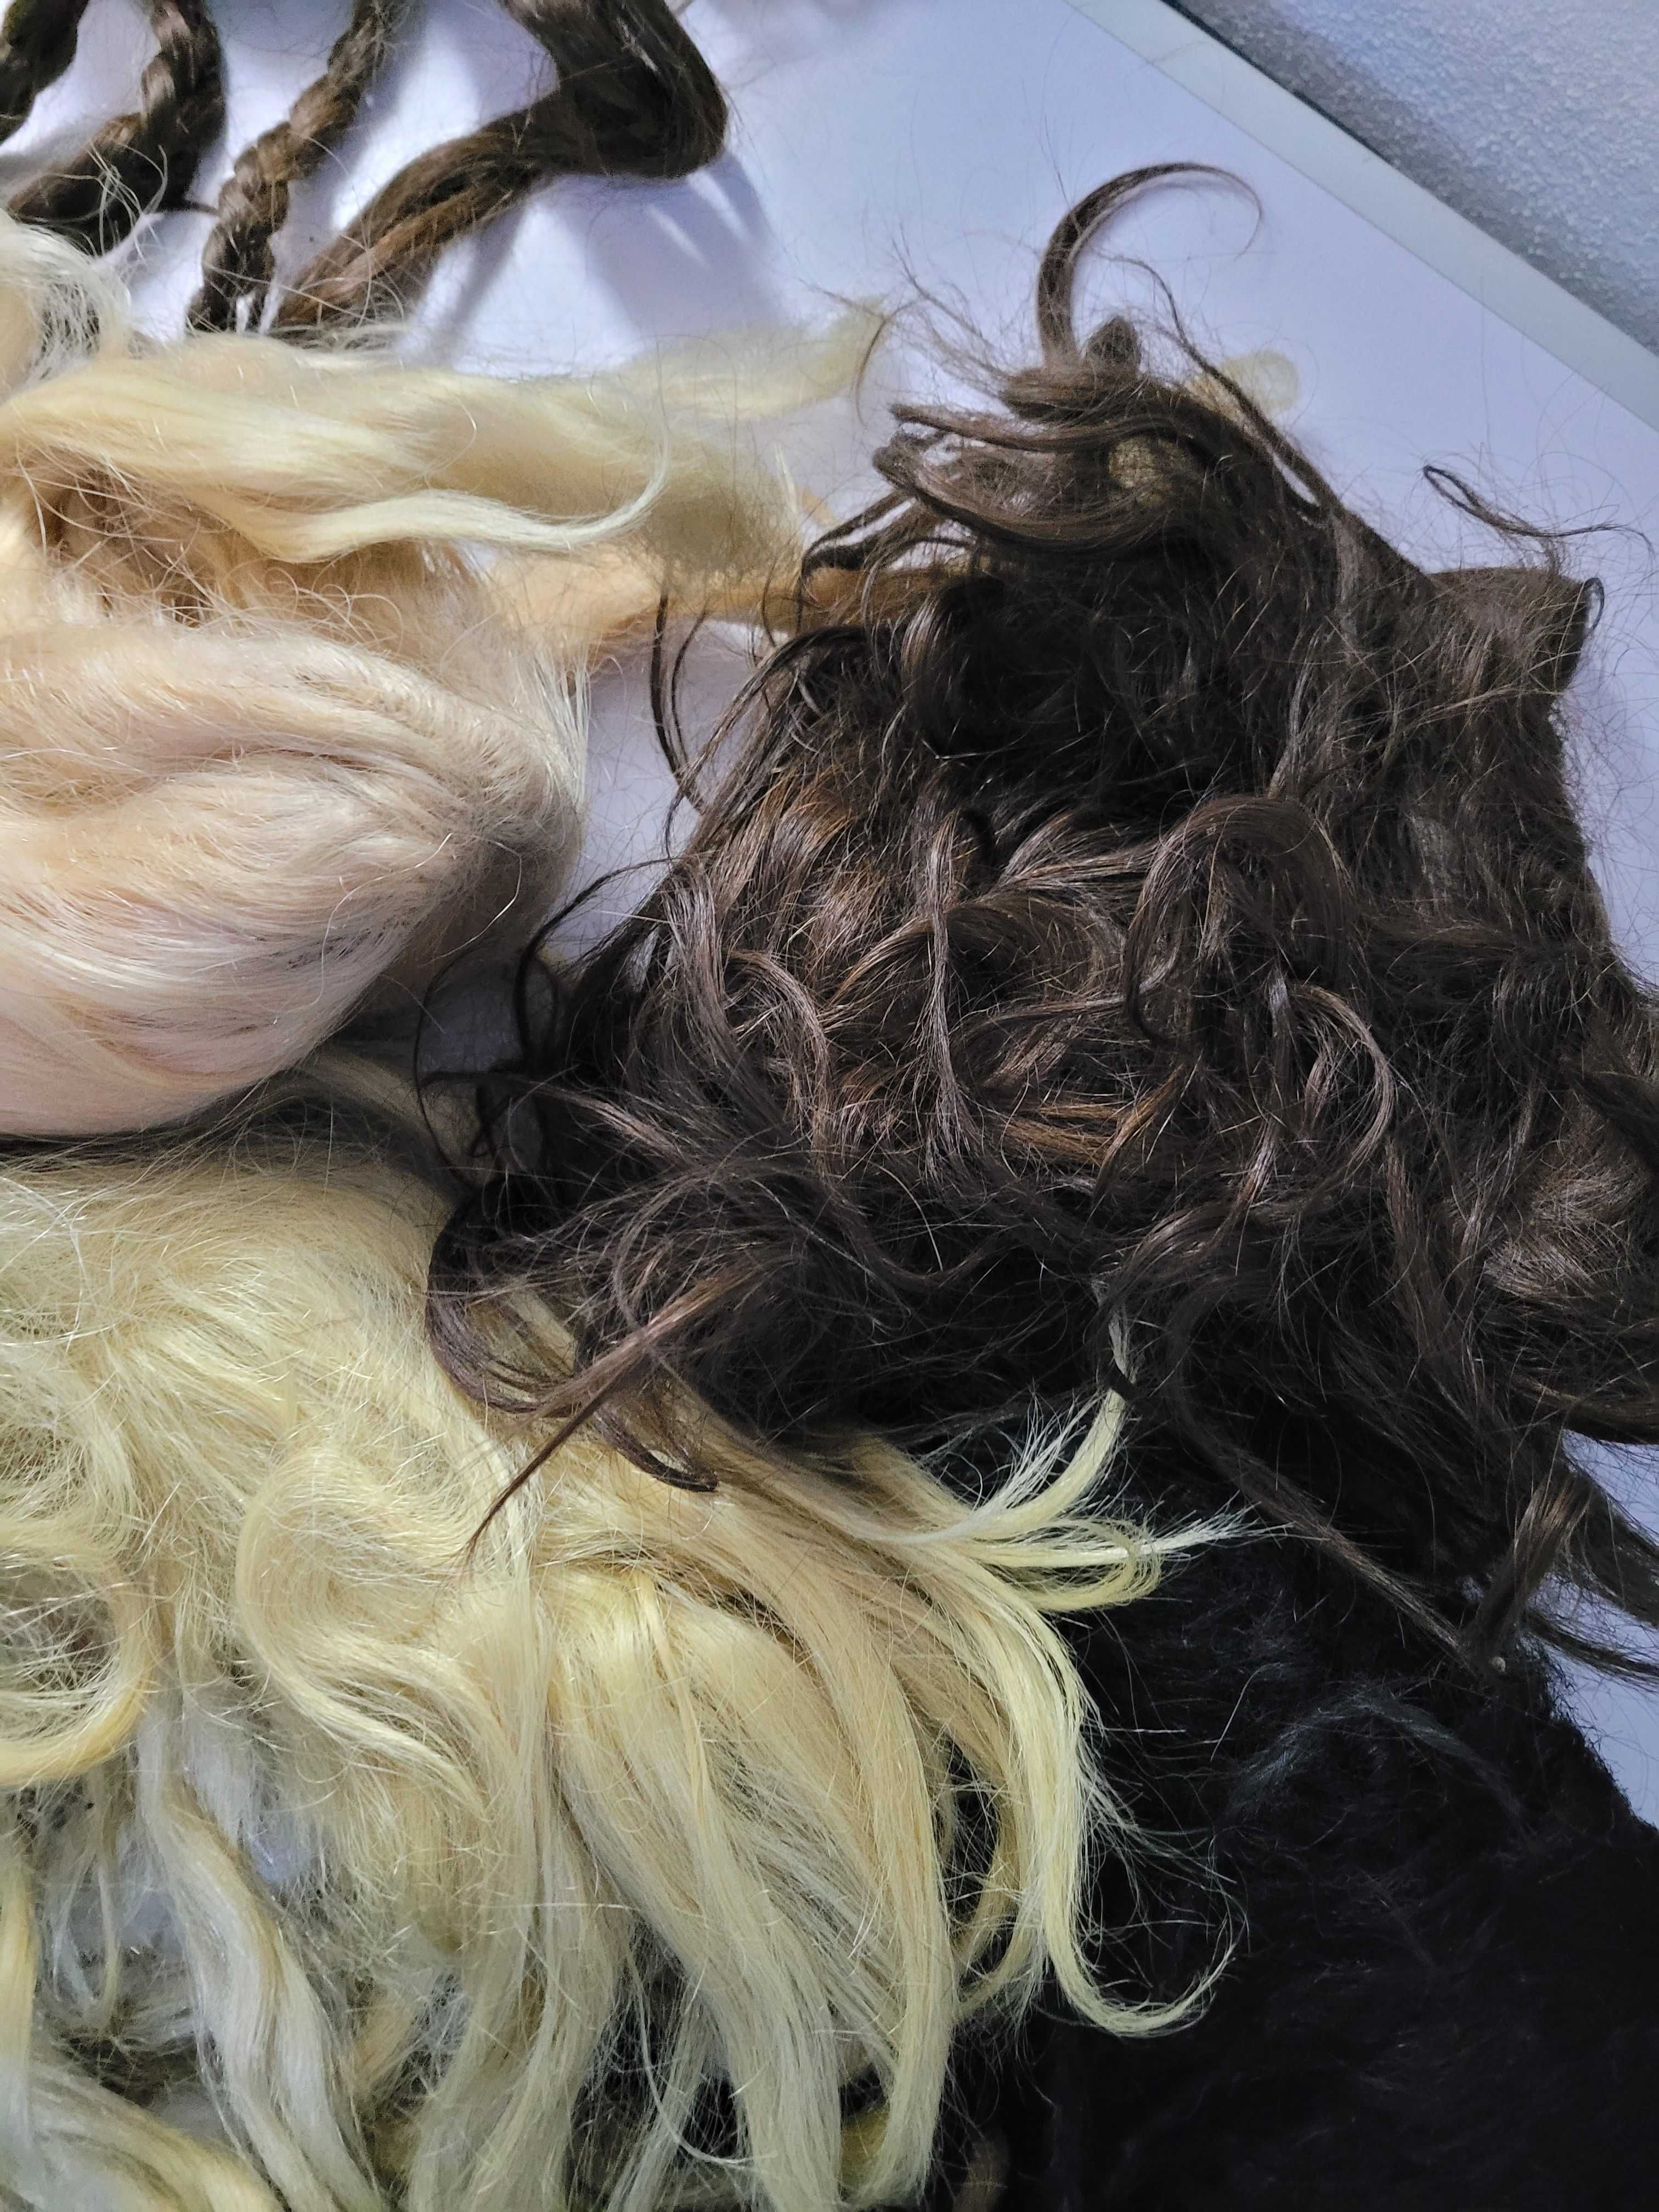 Lote de 150 cabeleiras variadas